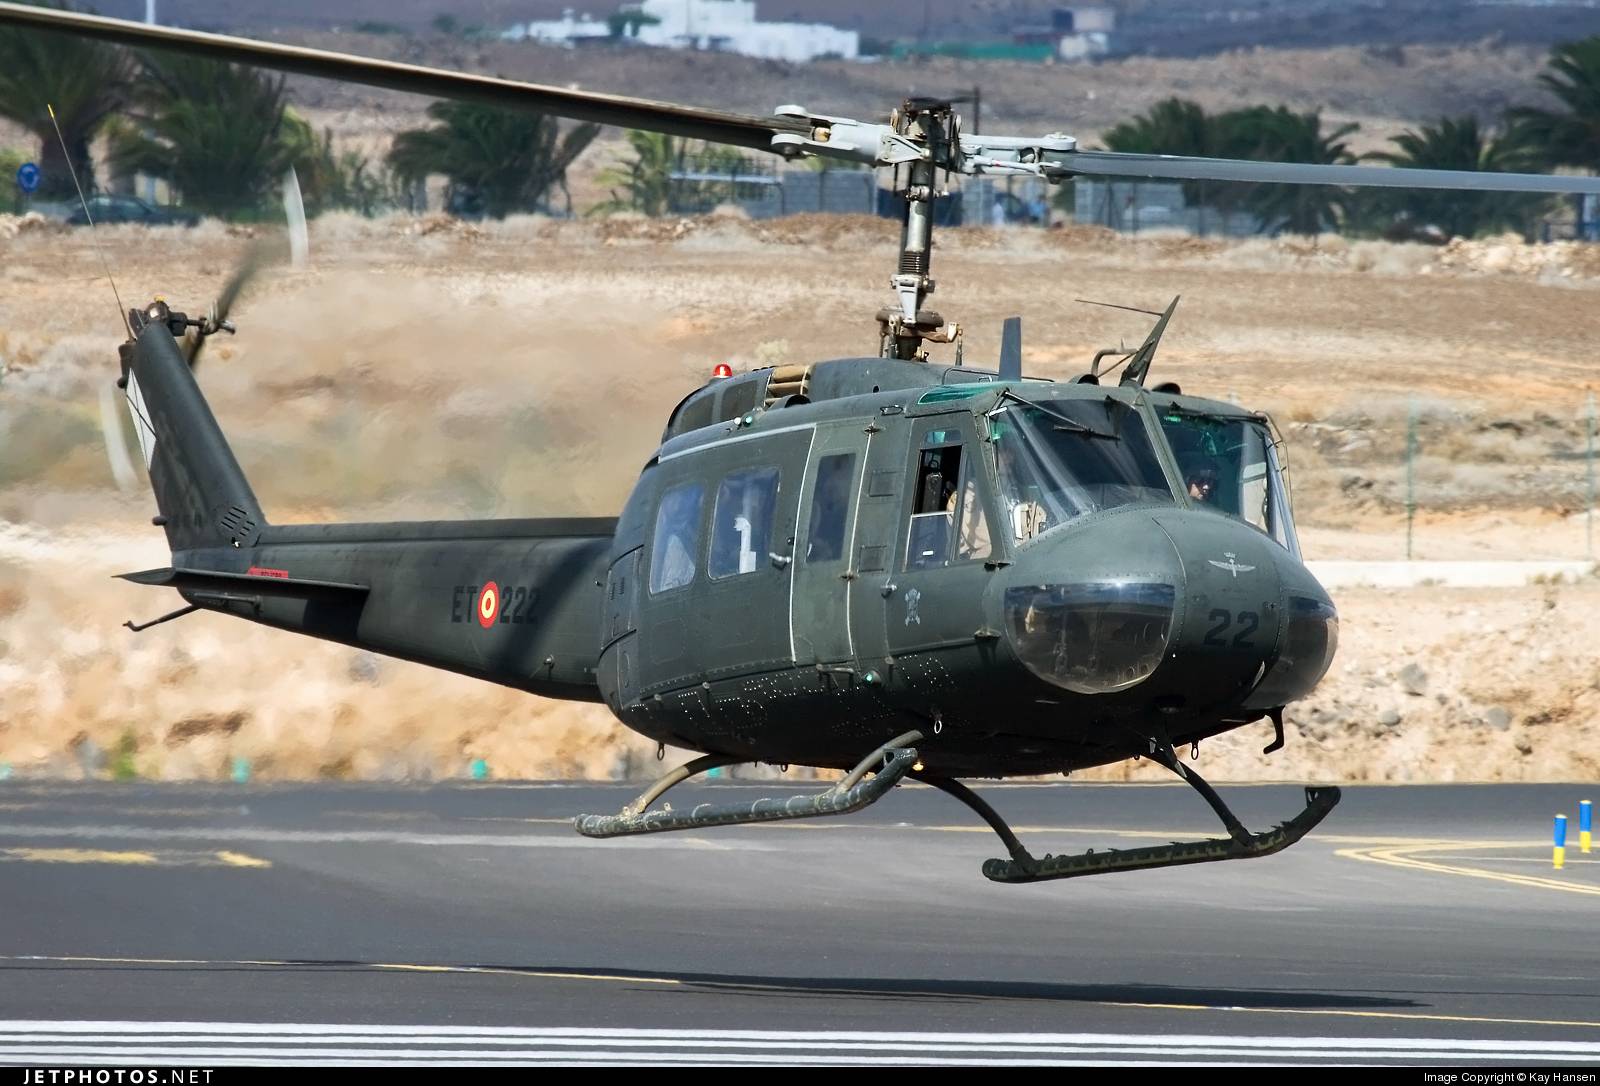 Вертолет белл uh-1 ирокез фото. видео. характеристики